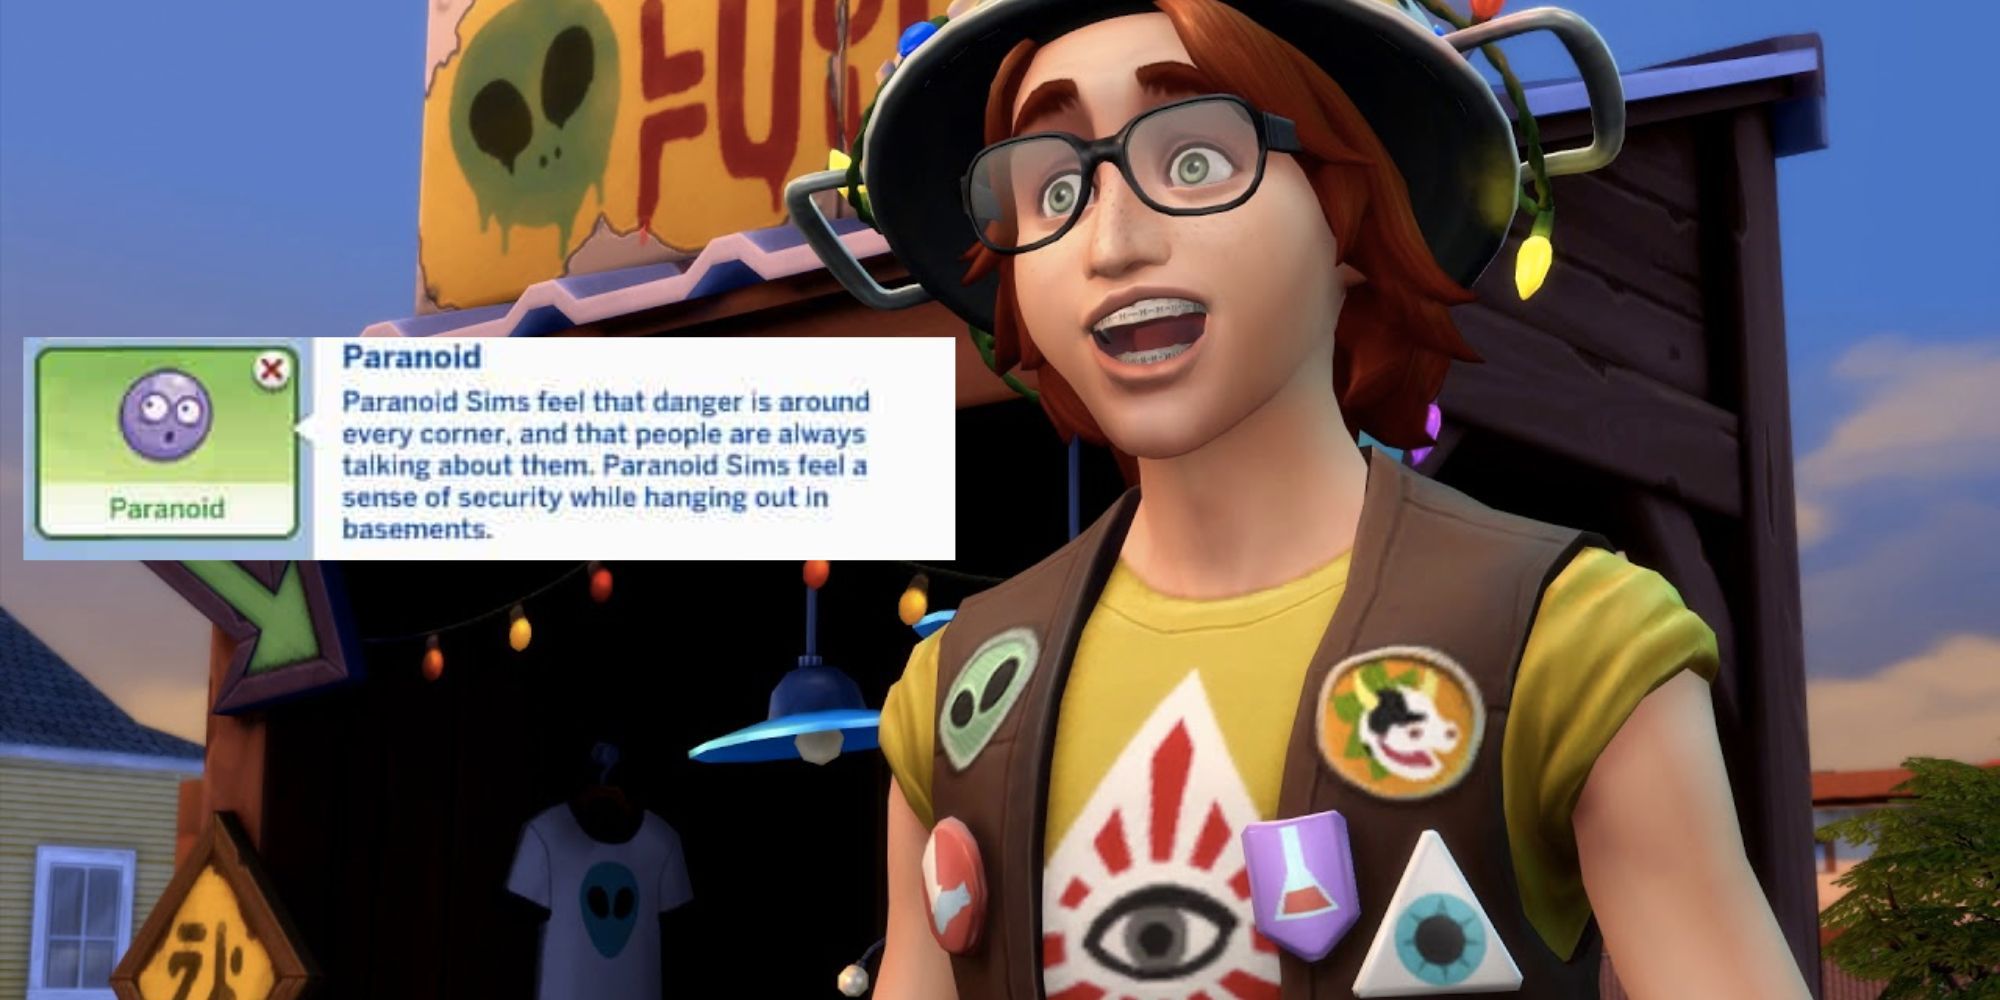 The Sims 4 Paranoid trait